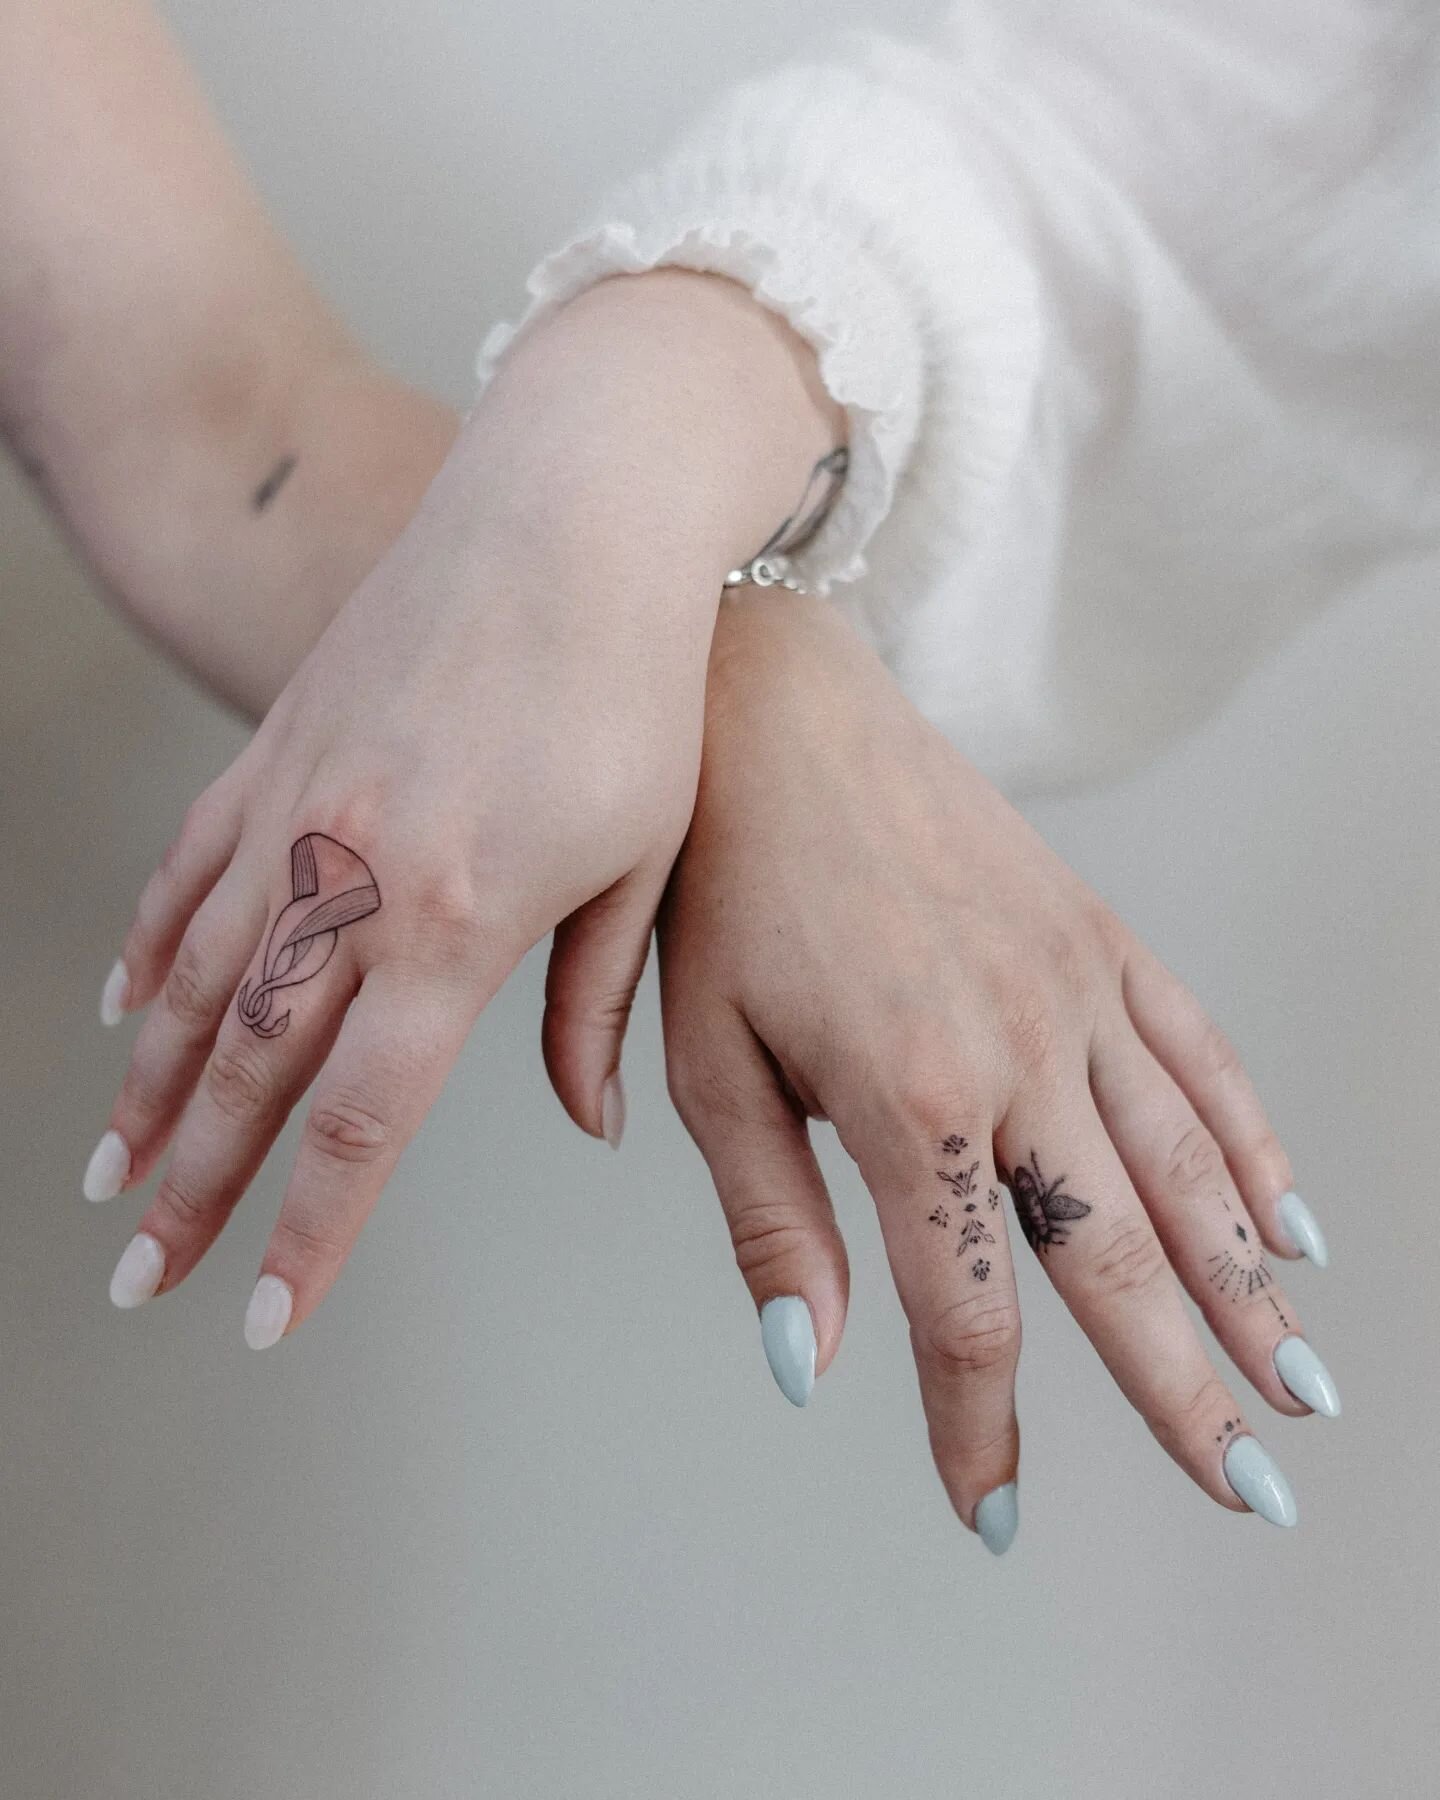 Hands *booking form in bio*
.
.
.
.
.
.
.
.
.
.
.
.
.
#tattoo #tattoos #ink #inked #art #tattooartist #tattooart #tattooed #tattoolife #tattooideas #love #artist #blackwork #instagood #tattoodesign #tatuagem #tattooing #tattooist #blackandgreytattoo 